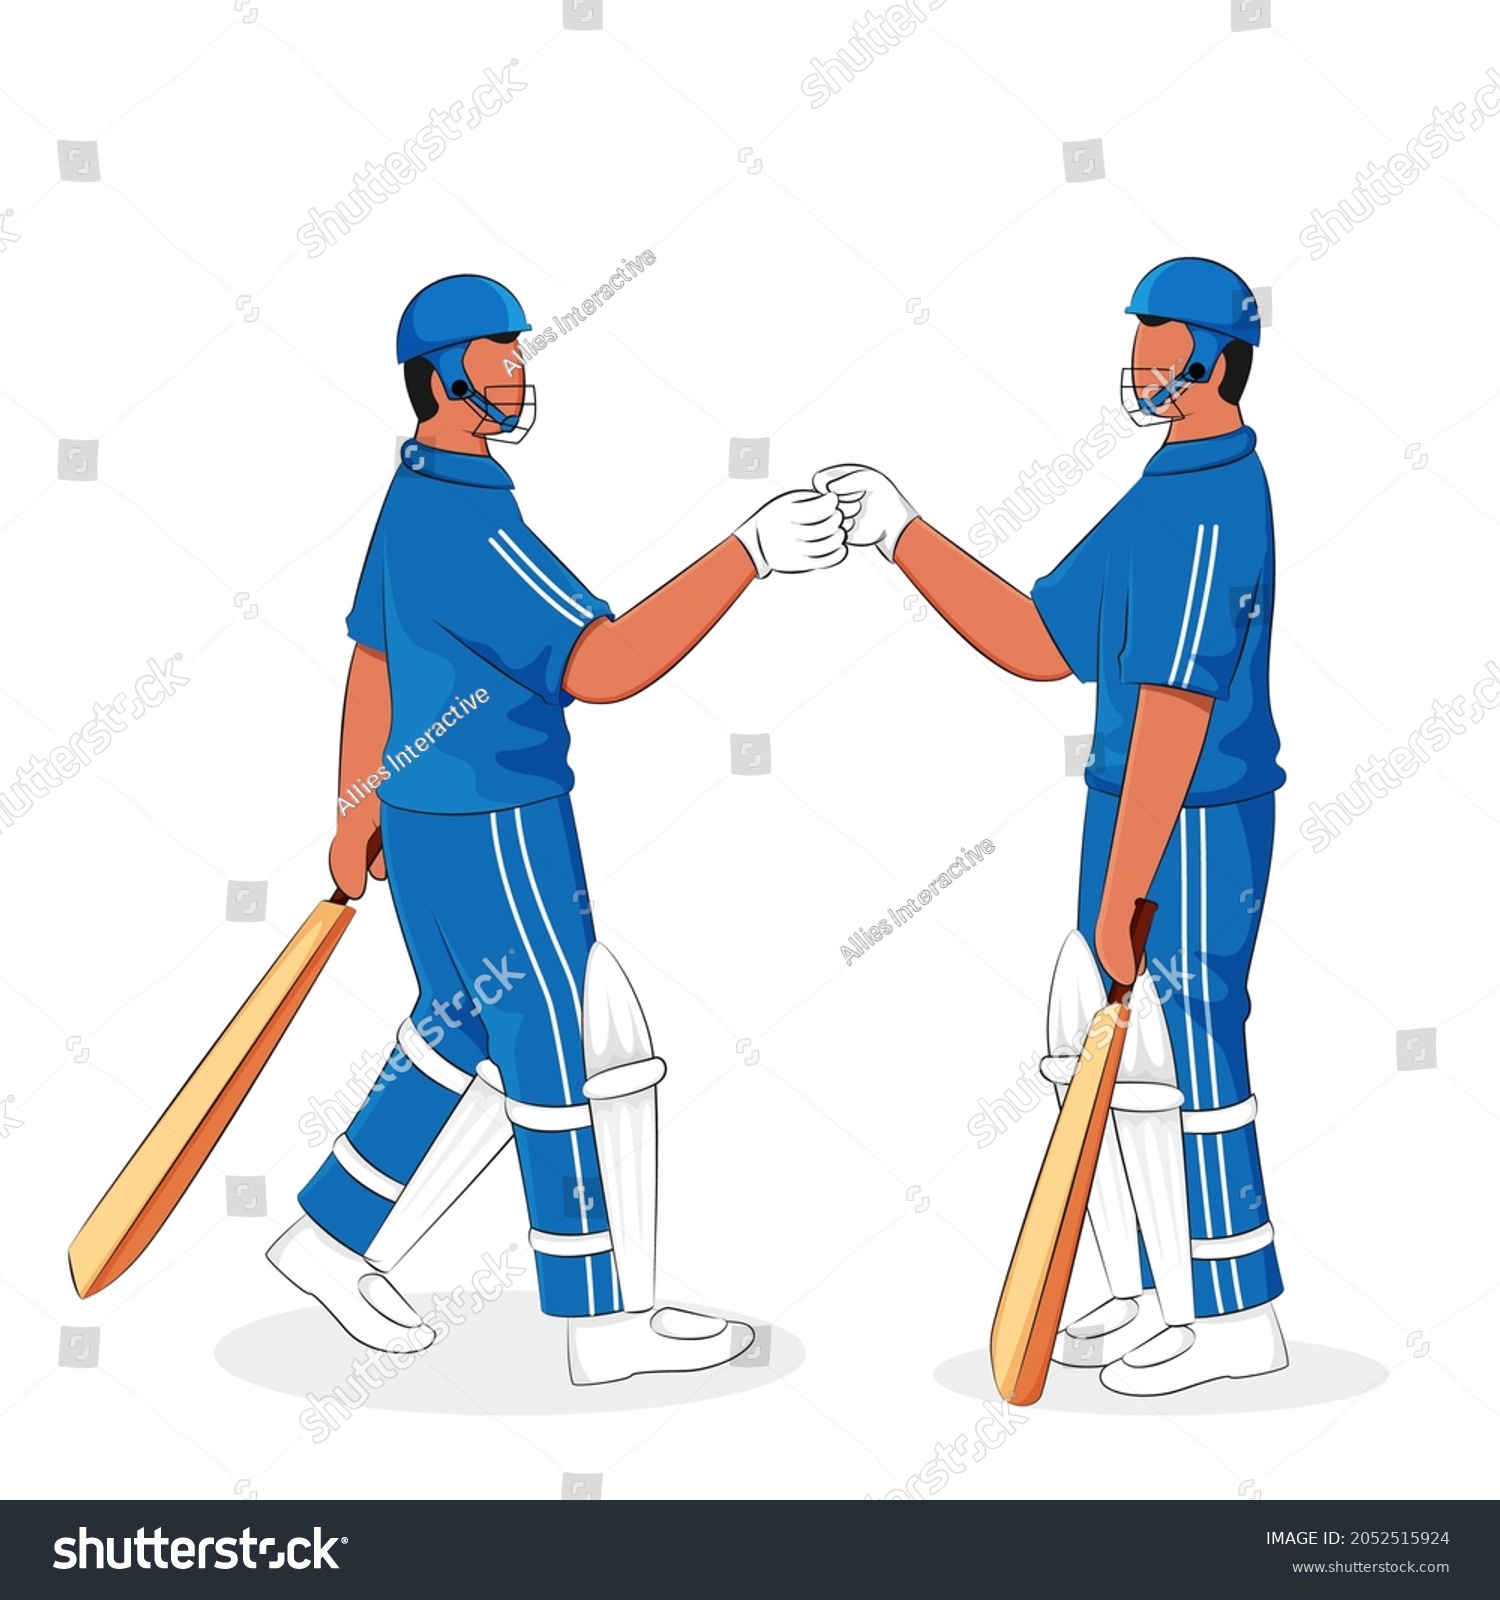 SVG of Cricket Batsmen Fist Bumping Each Other On White Background. svg